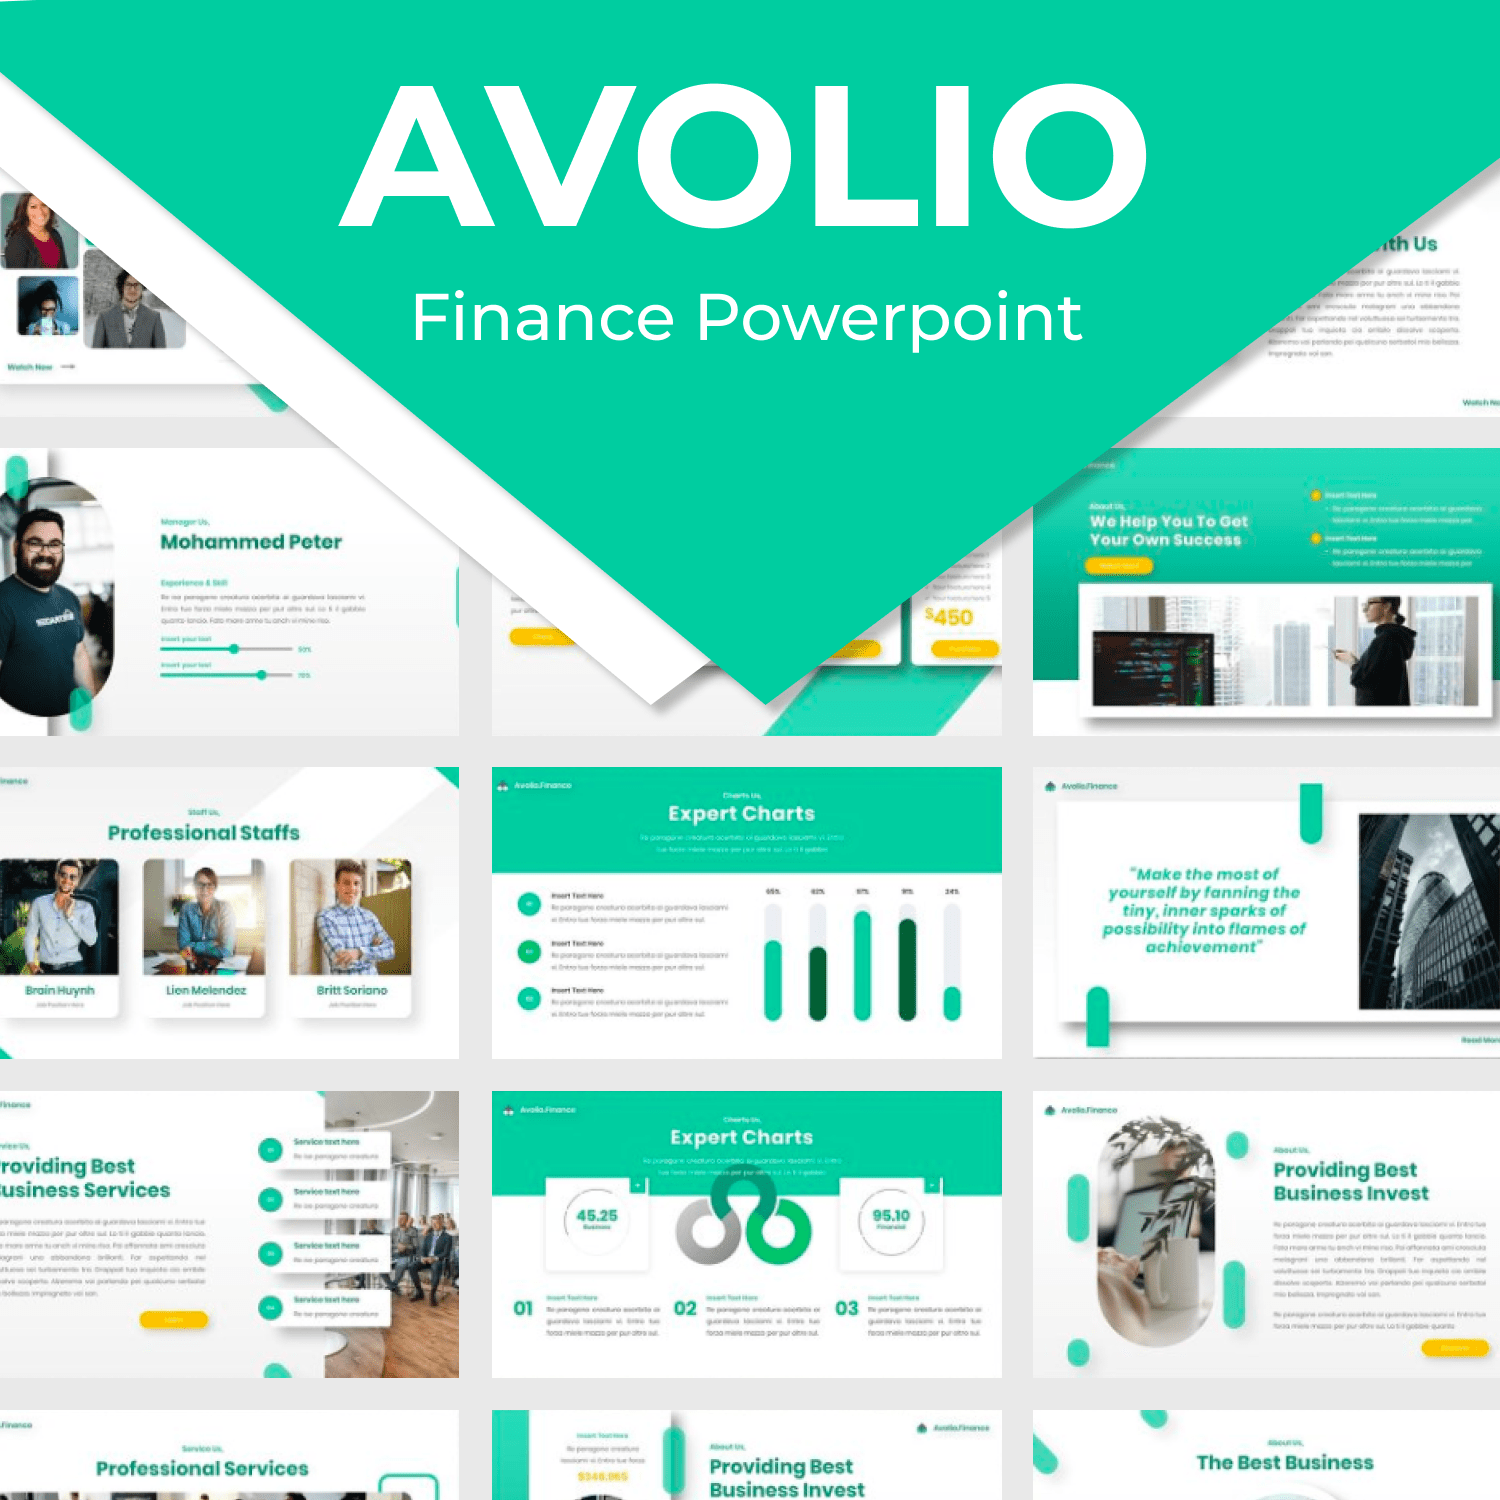 Avolio Finance Powerpoint main cover.